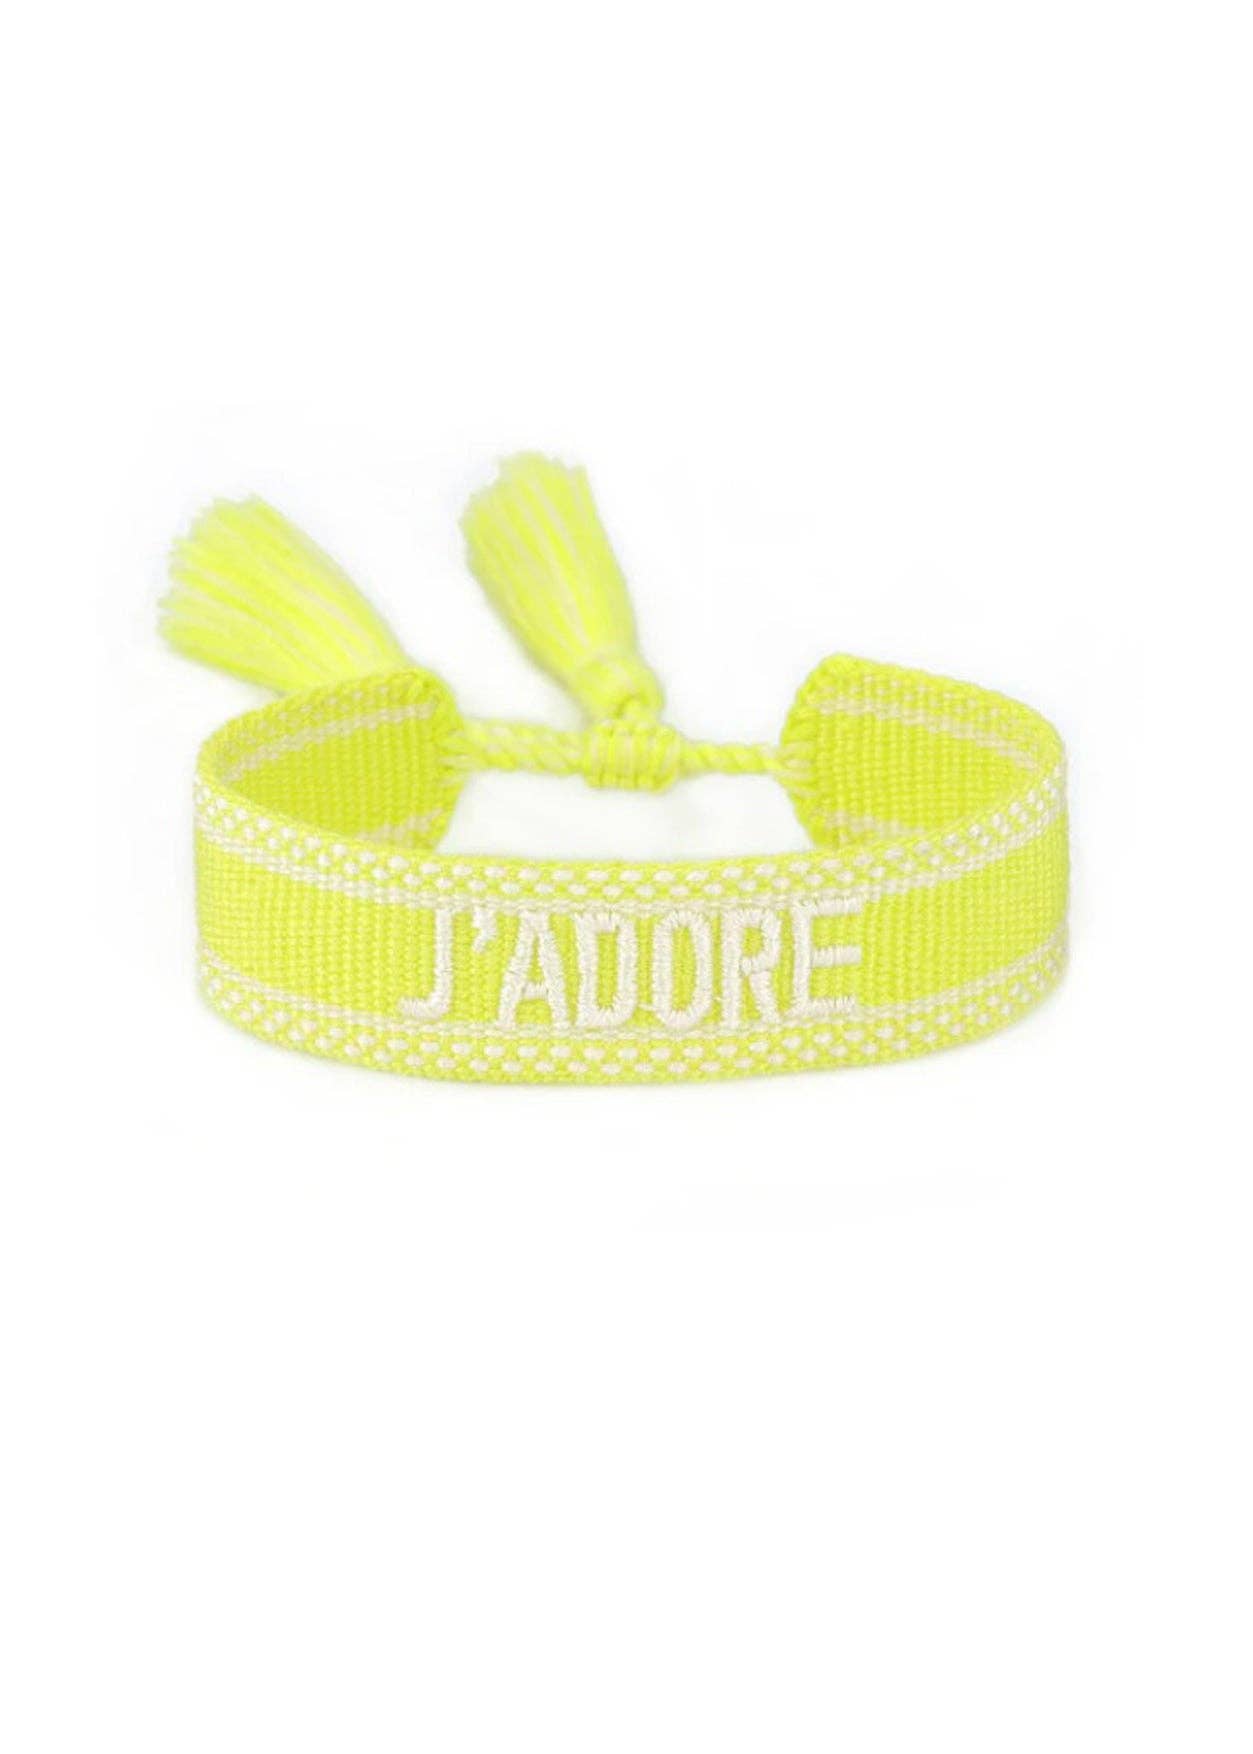 Wristband Neon Yellow J Adore - Something about Sofia